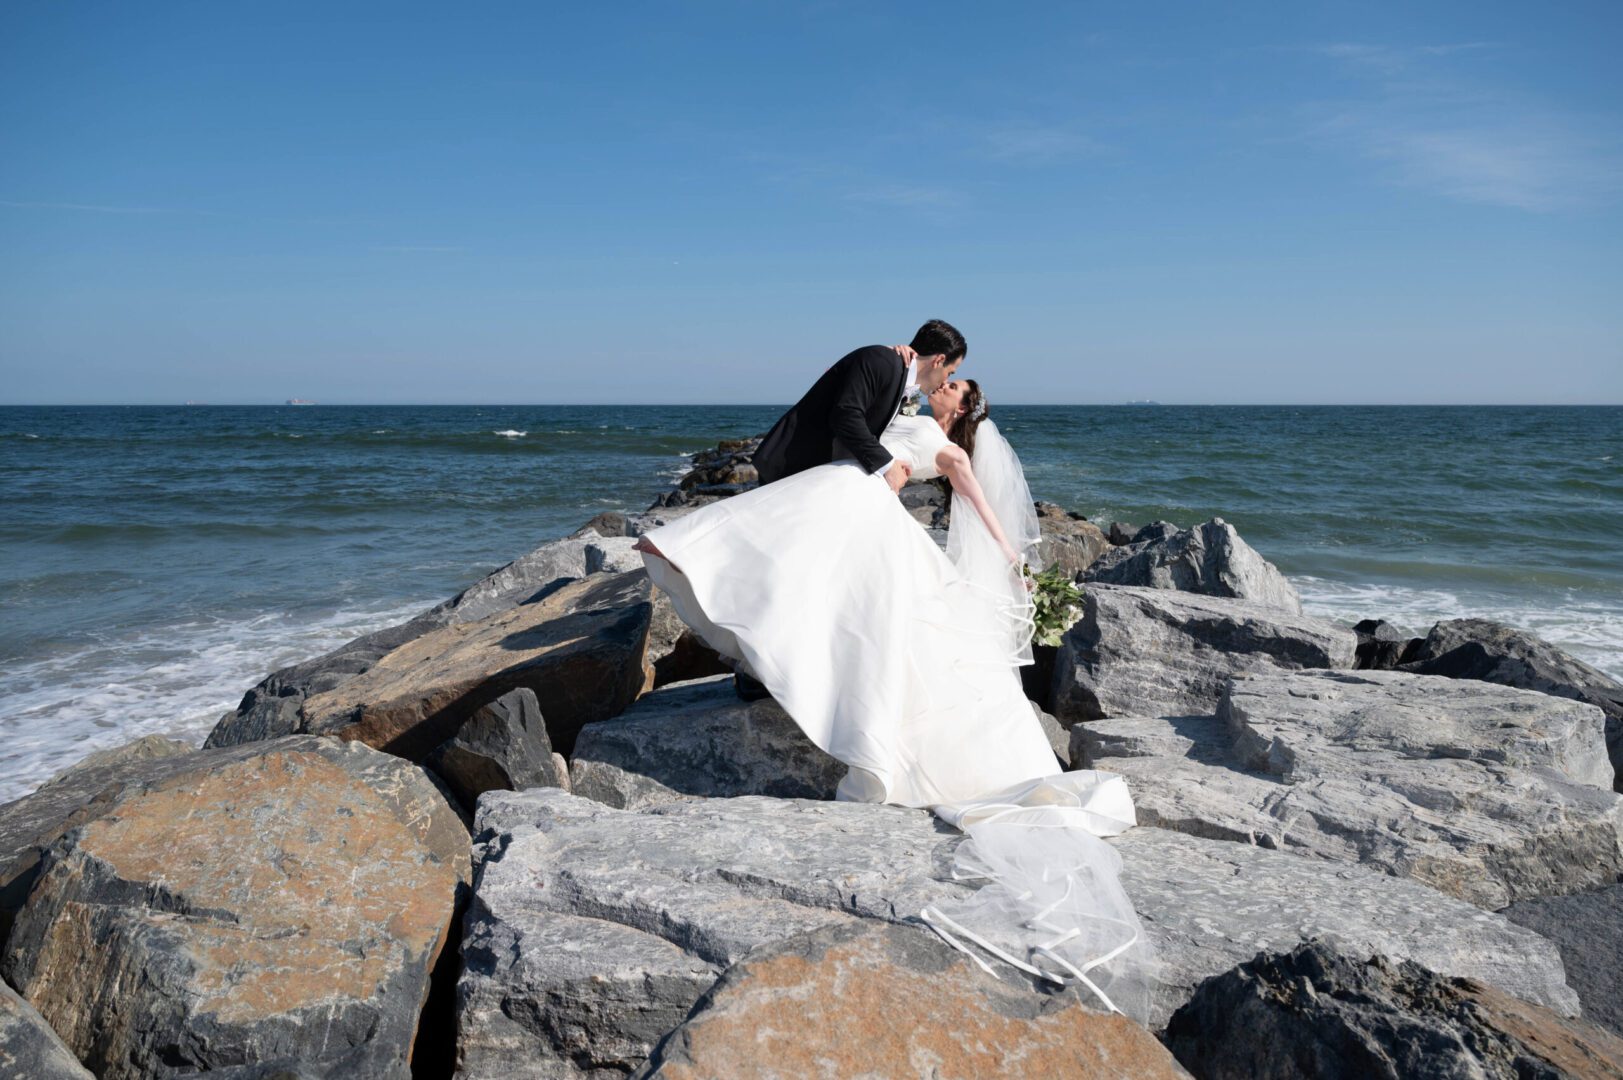 Happy married couple in a sea rock